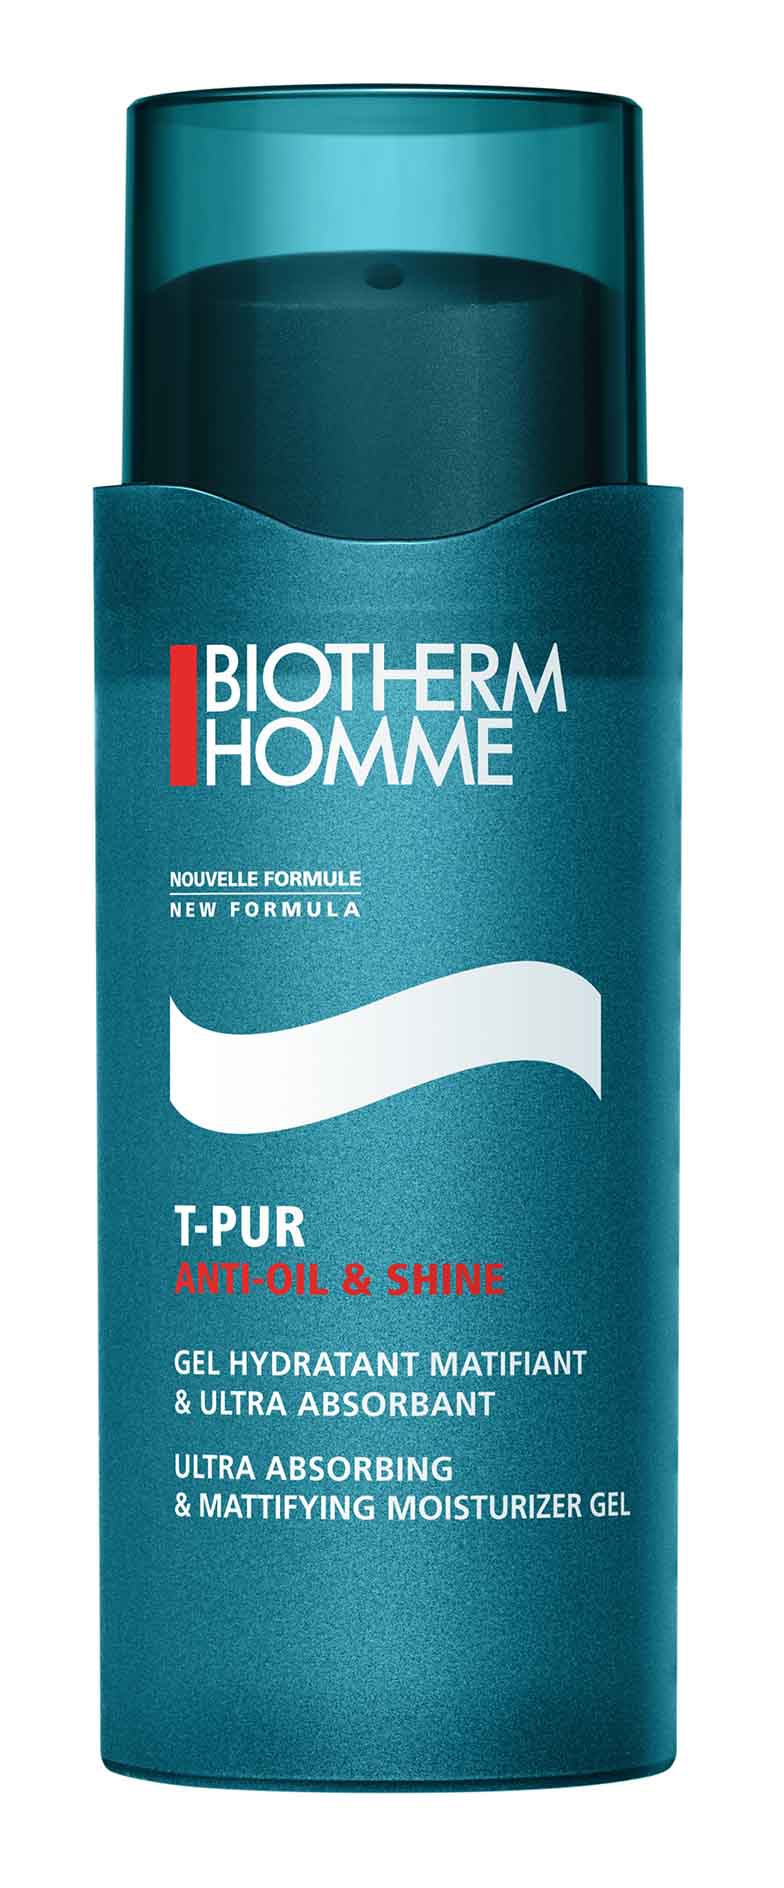 Biotherm Homme T-PUR Anti-oil & Shine Ultra Absorbing & Mattifying Moisturizing Gel